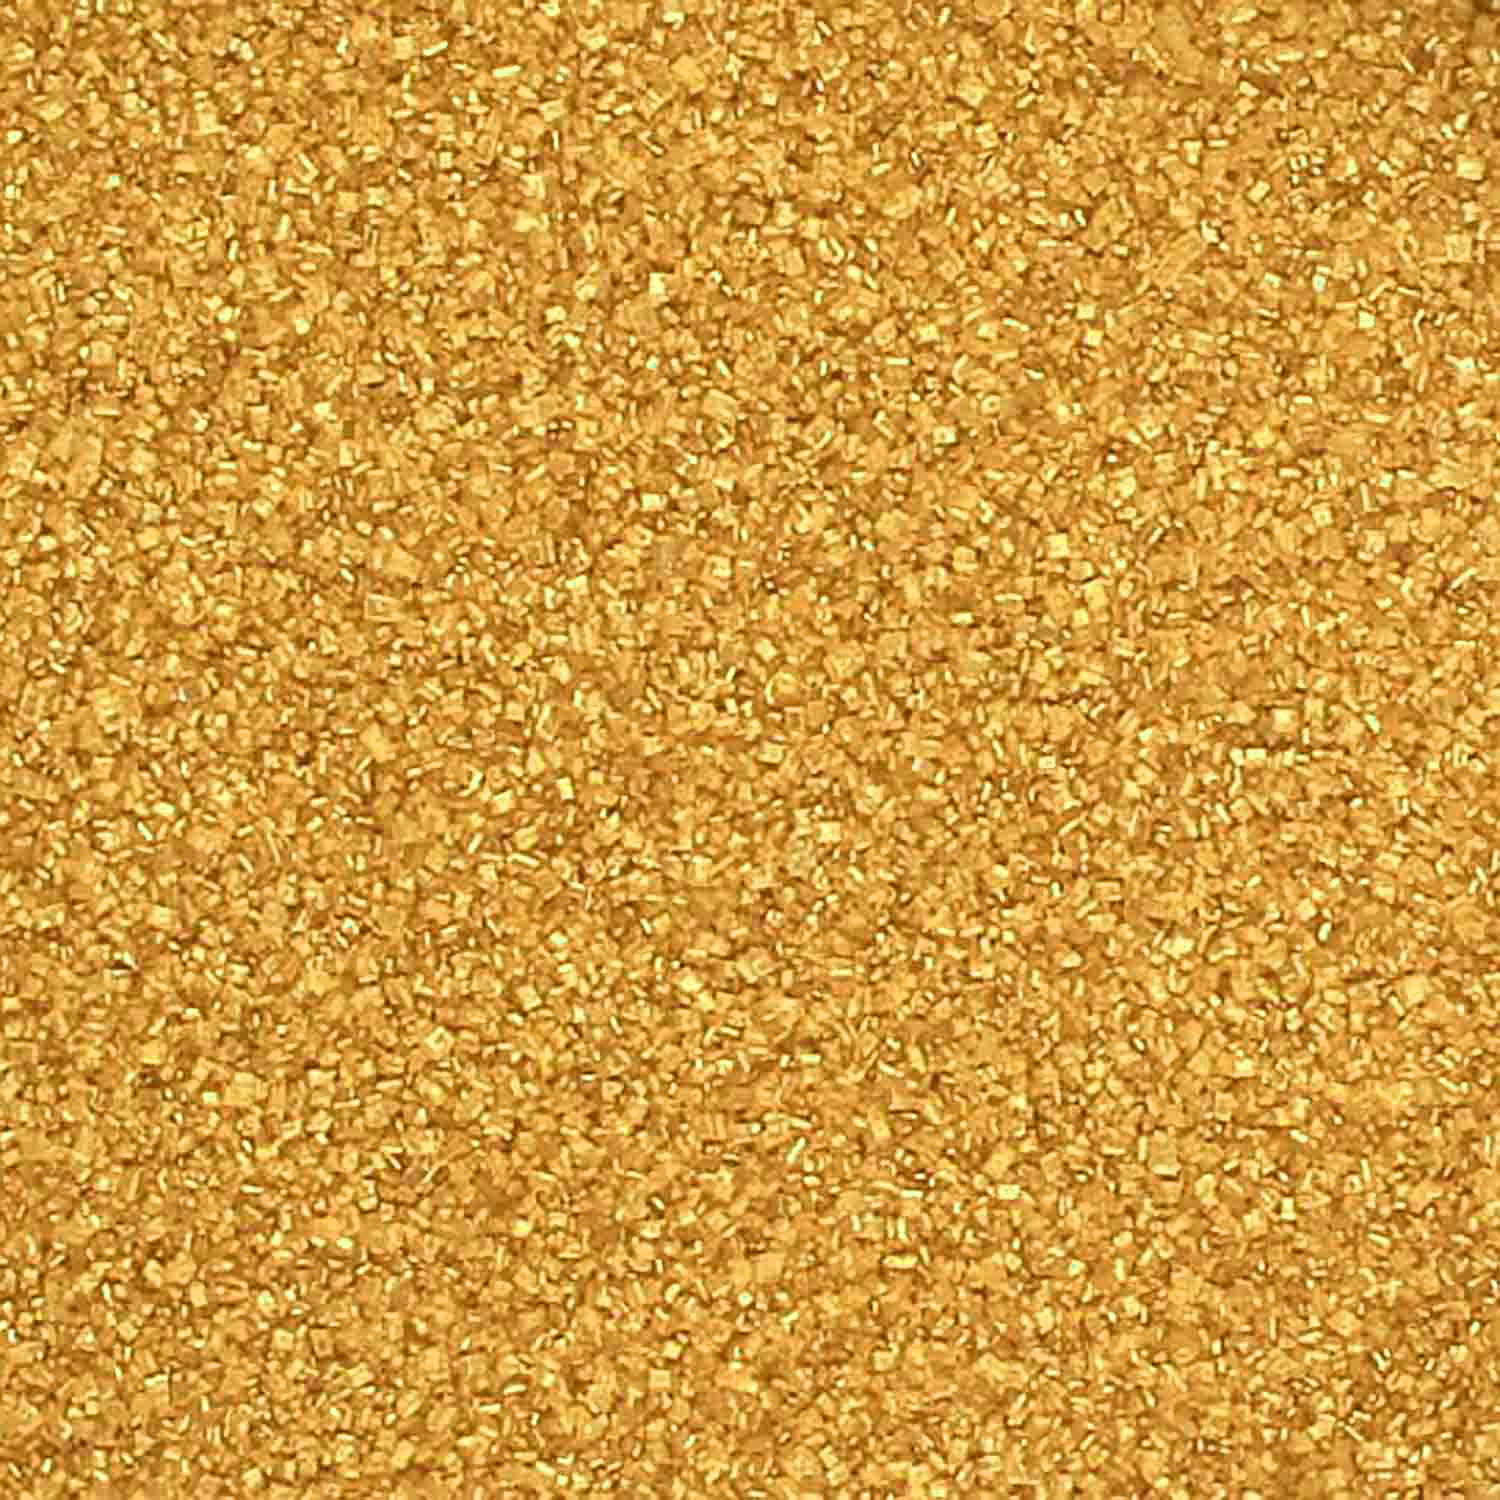 Shimmering Gold Sanding Sugar